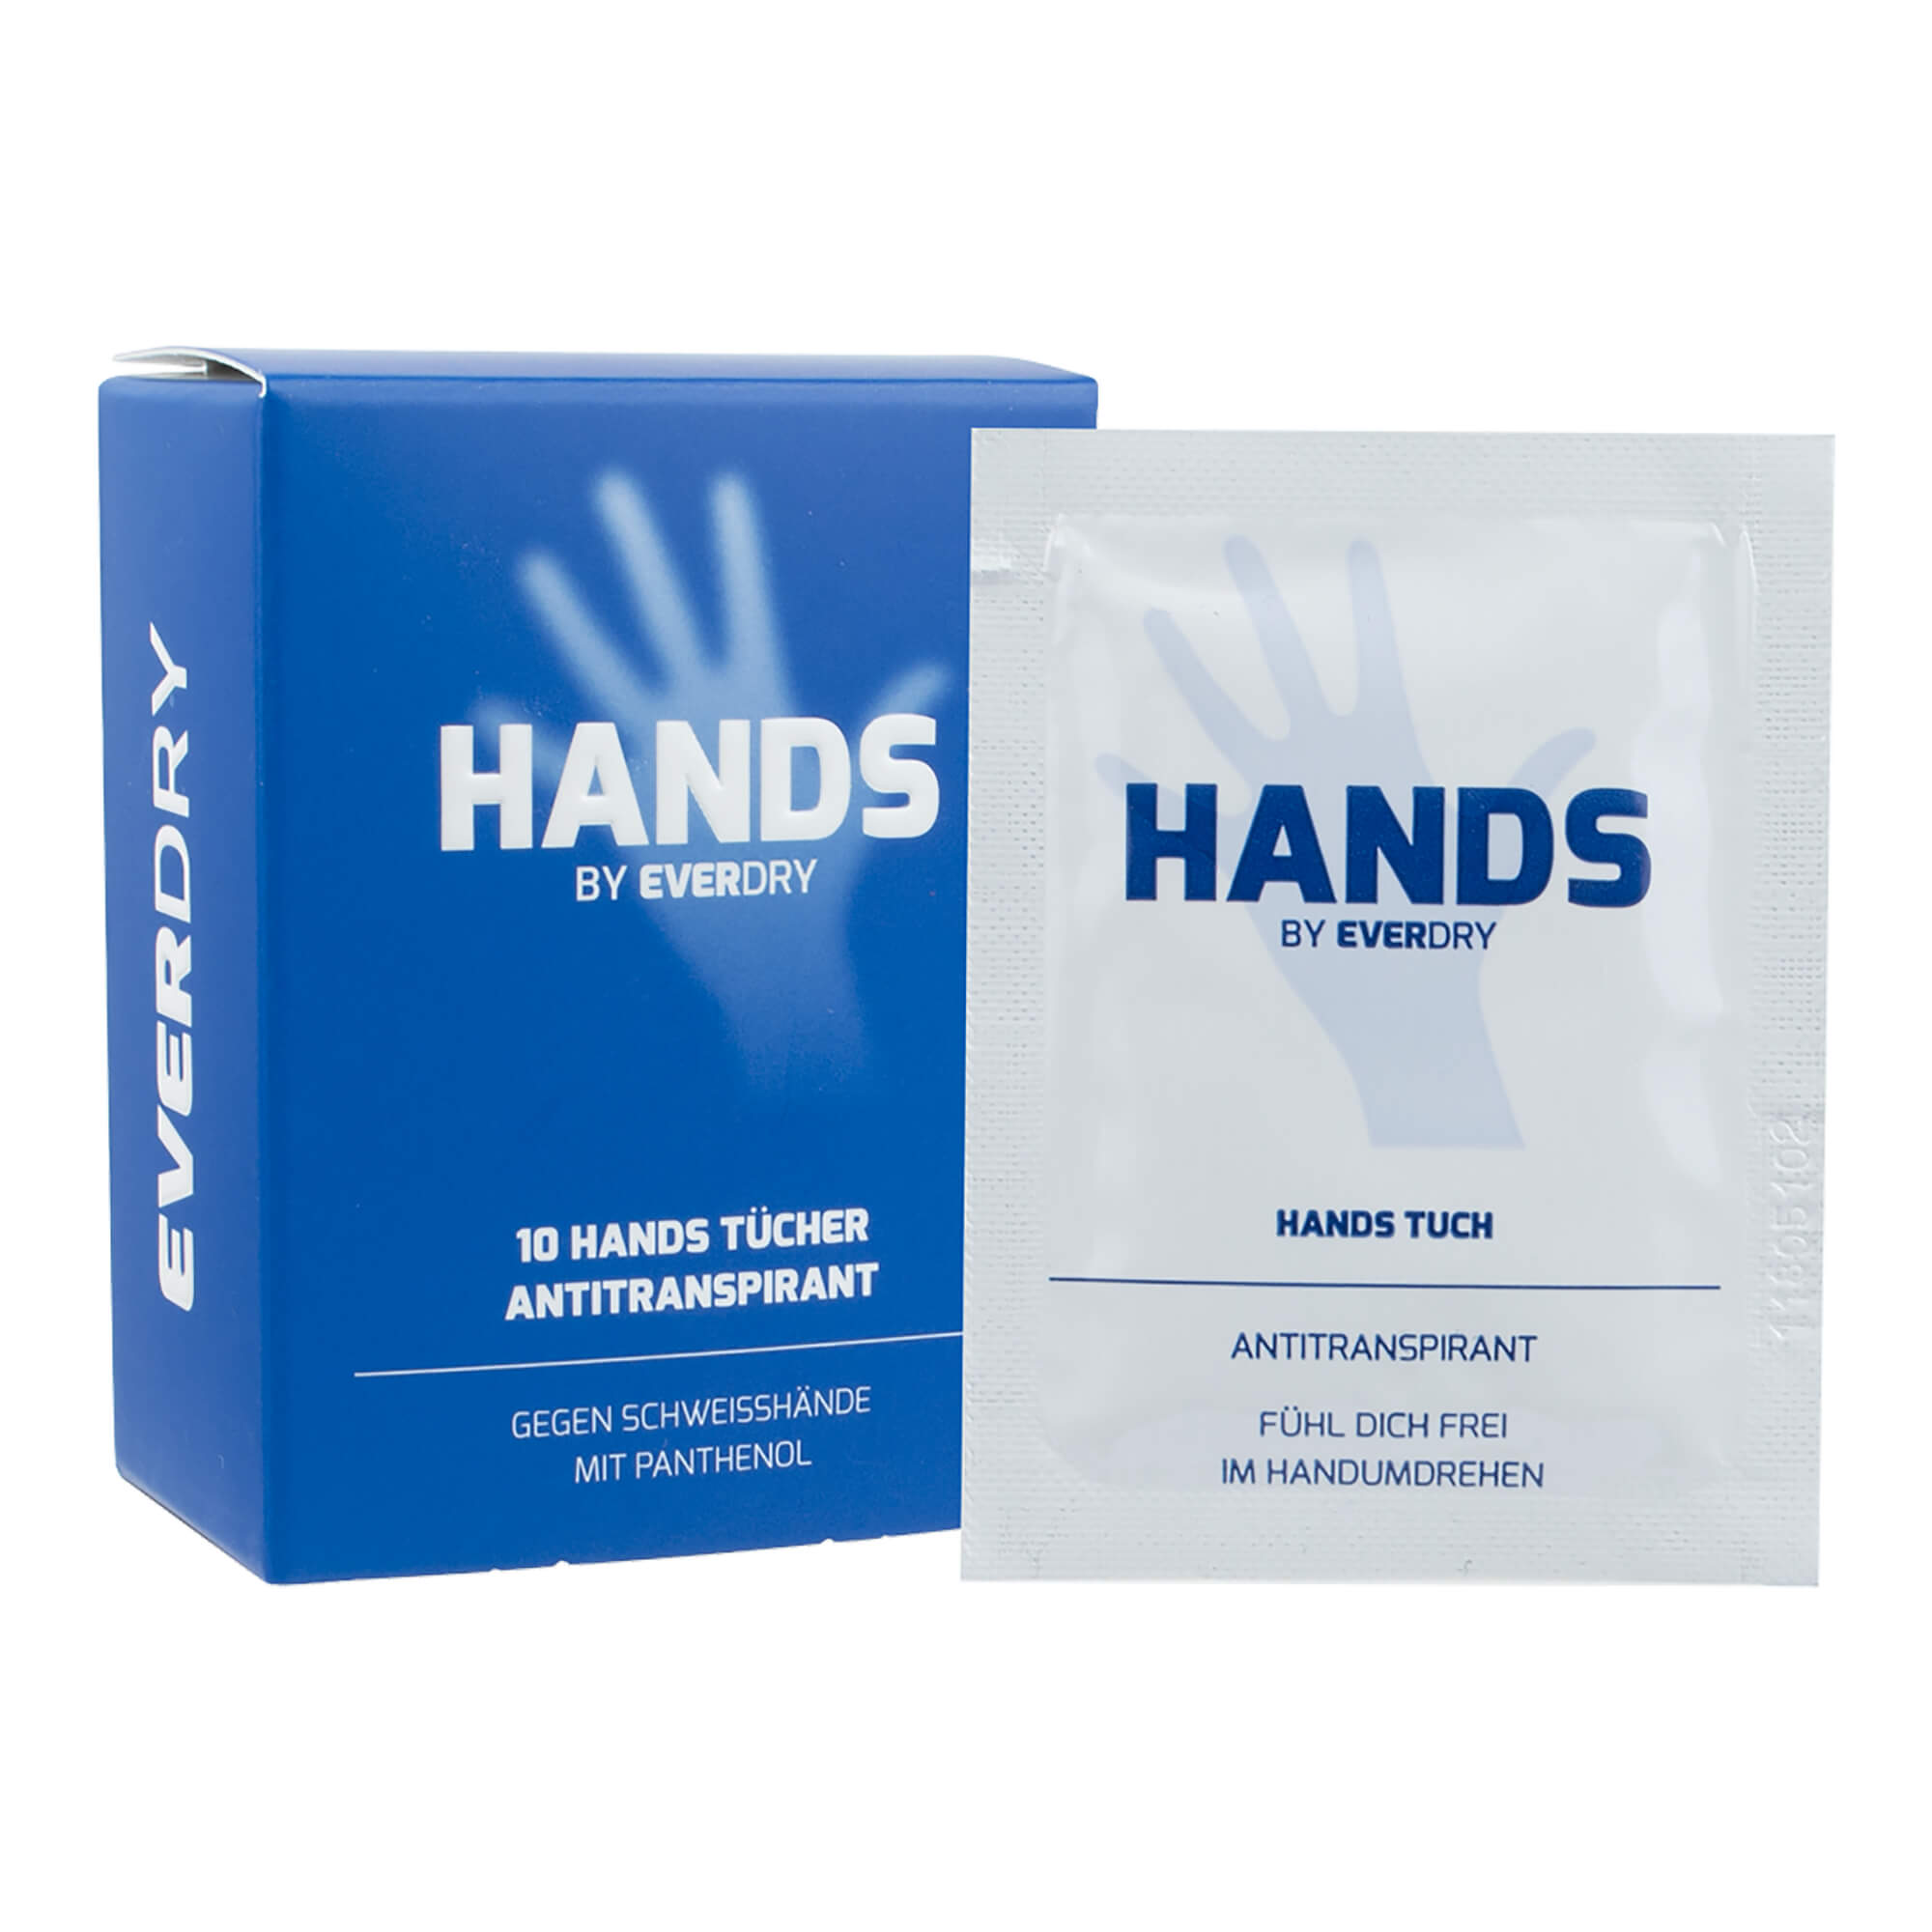 Antitranspirant Hands Tücher gegen Schwitzen an den Händen.